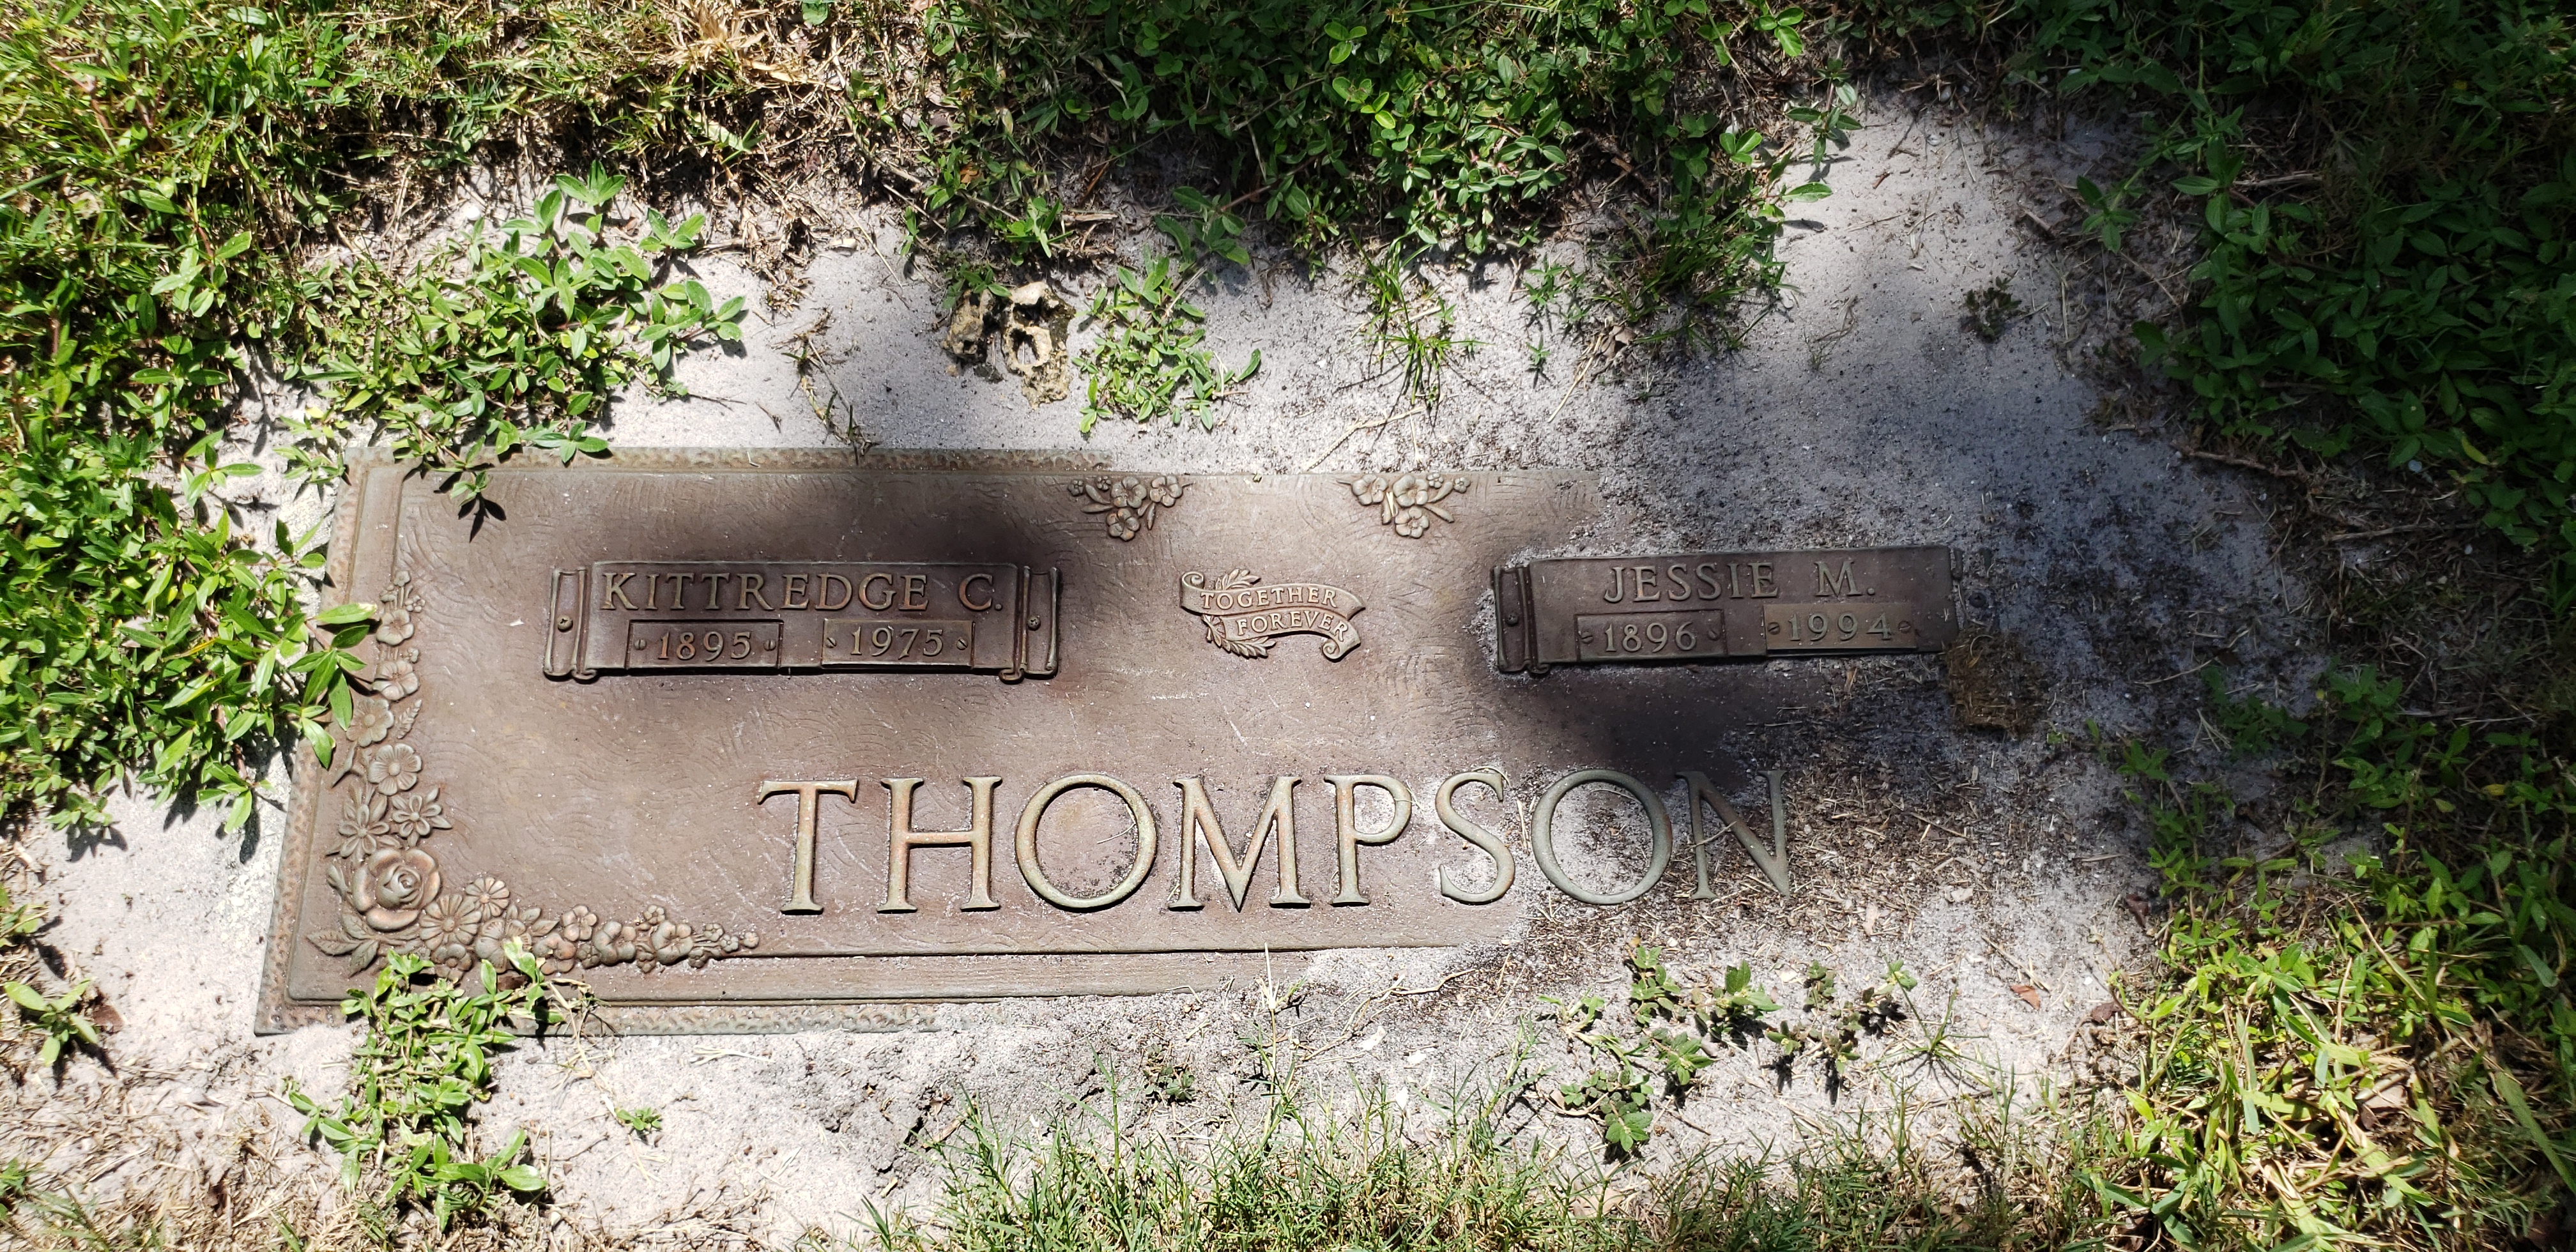 Kittredge C Thompson